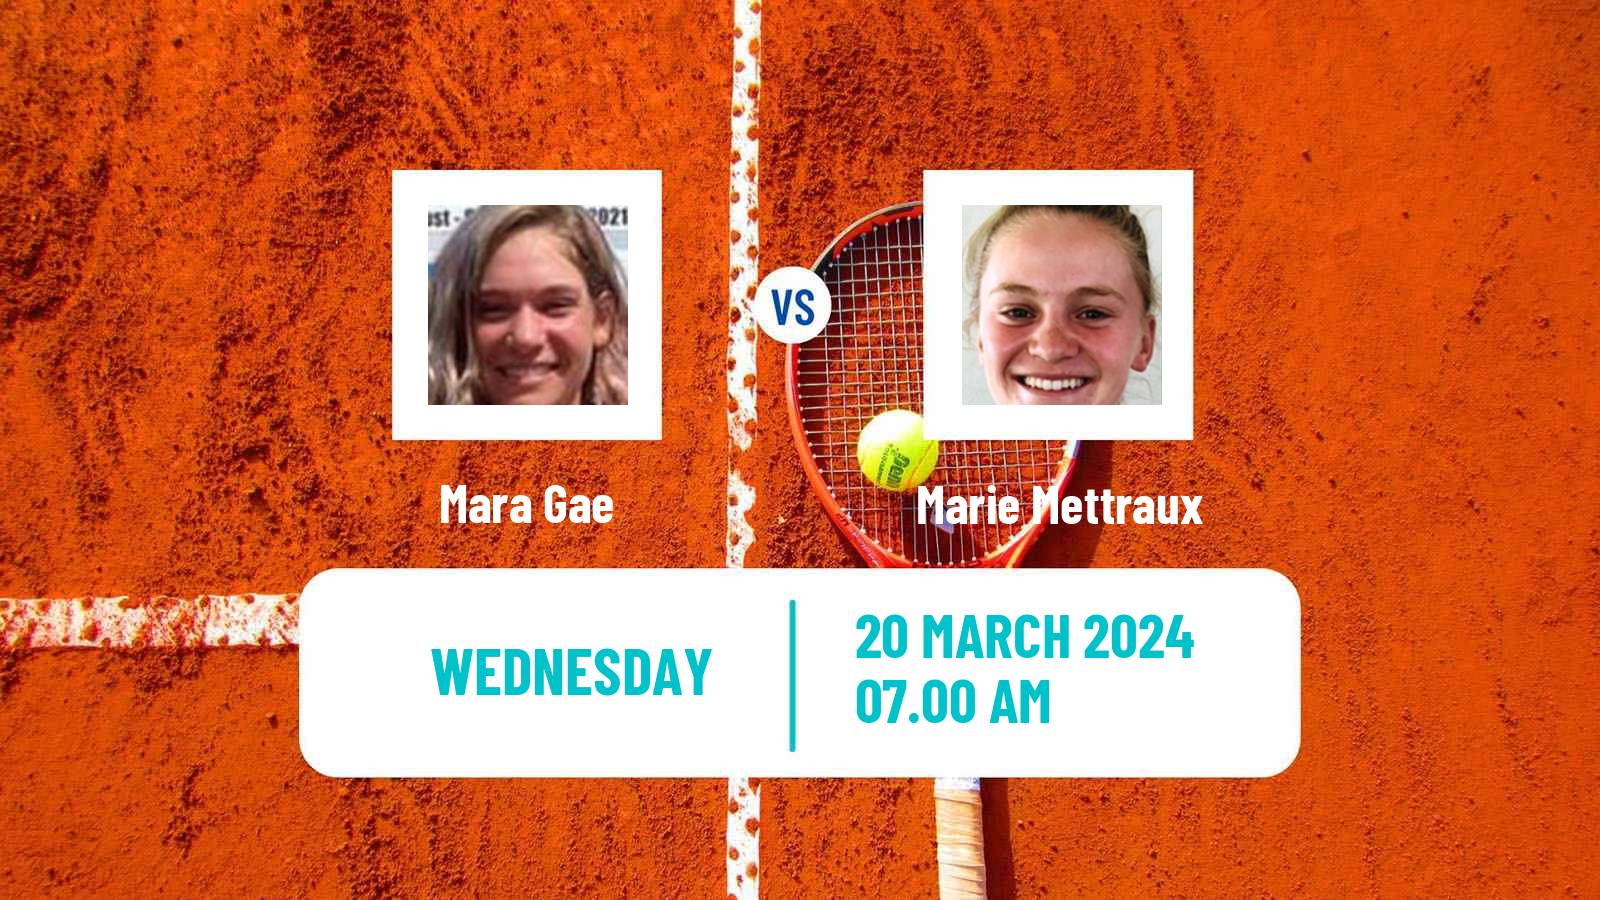 Tennis ITF W15 Antalya 6 Women Mara Gae - Marie Mettraux